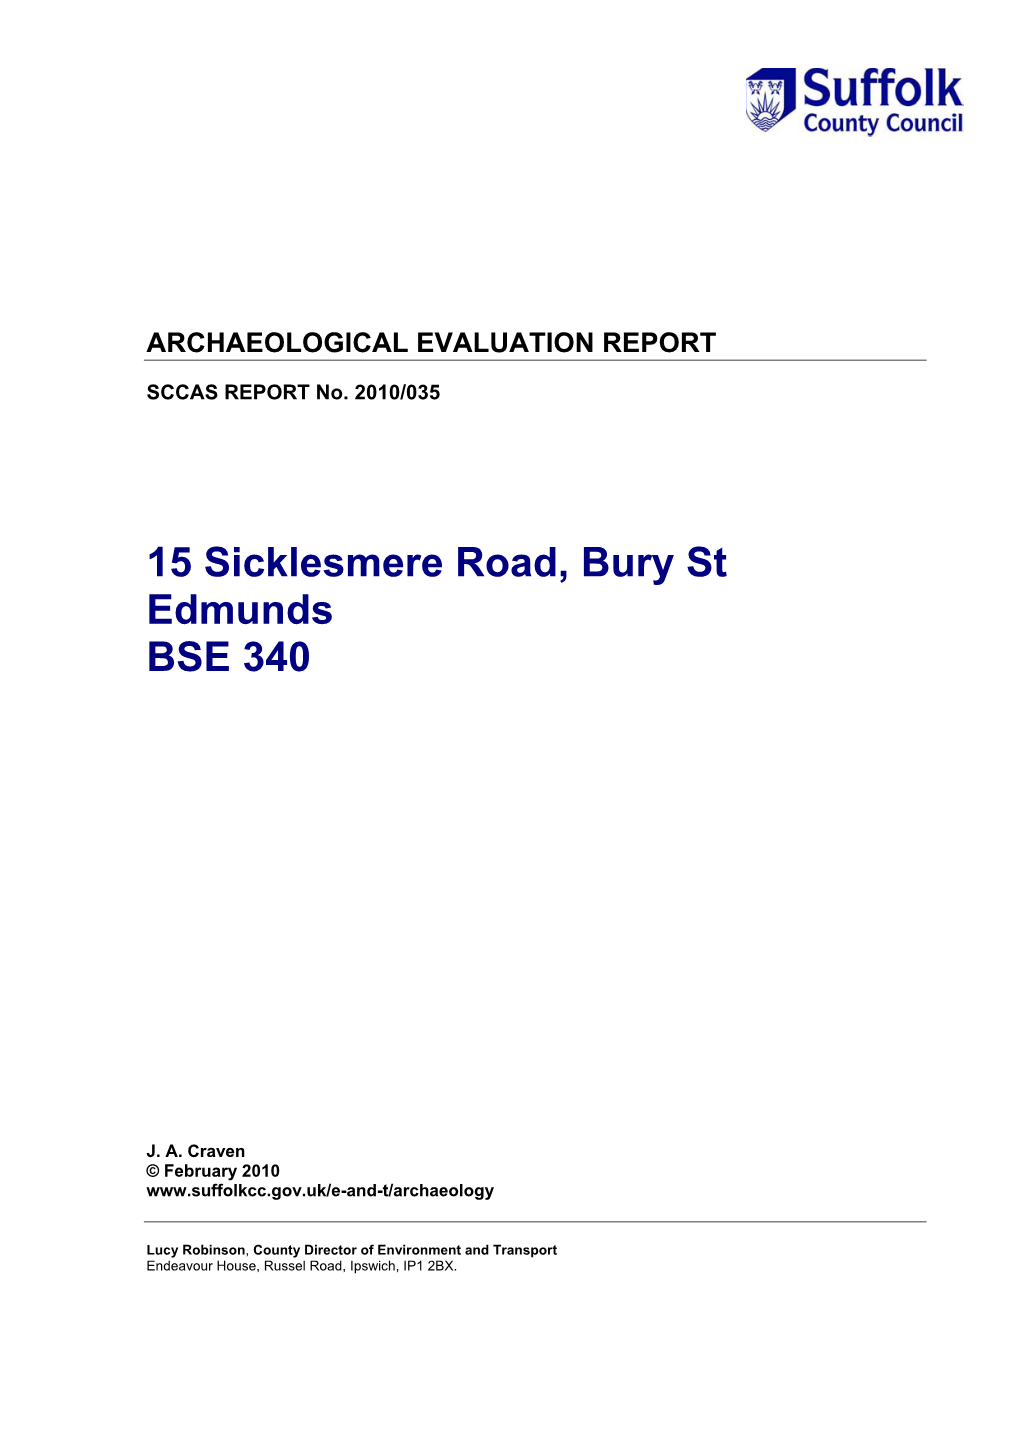 15 Sicklesmere Road, Bury St Edmunds BSE 340